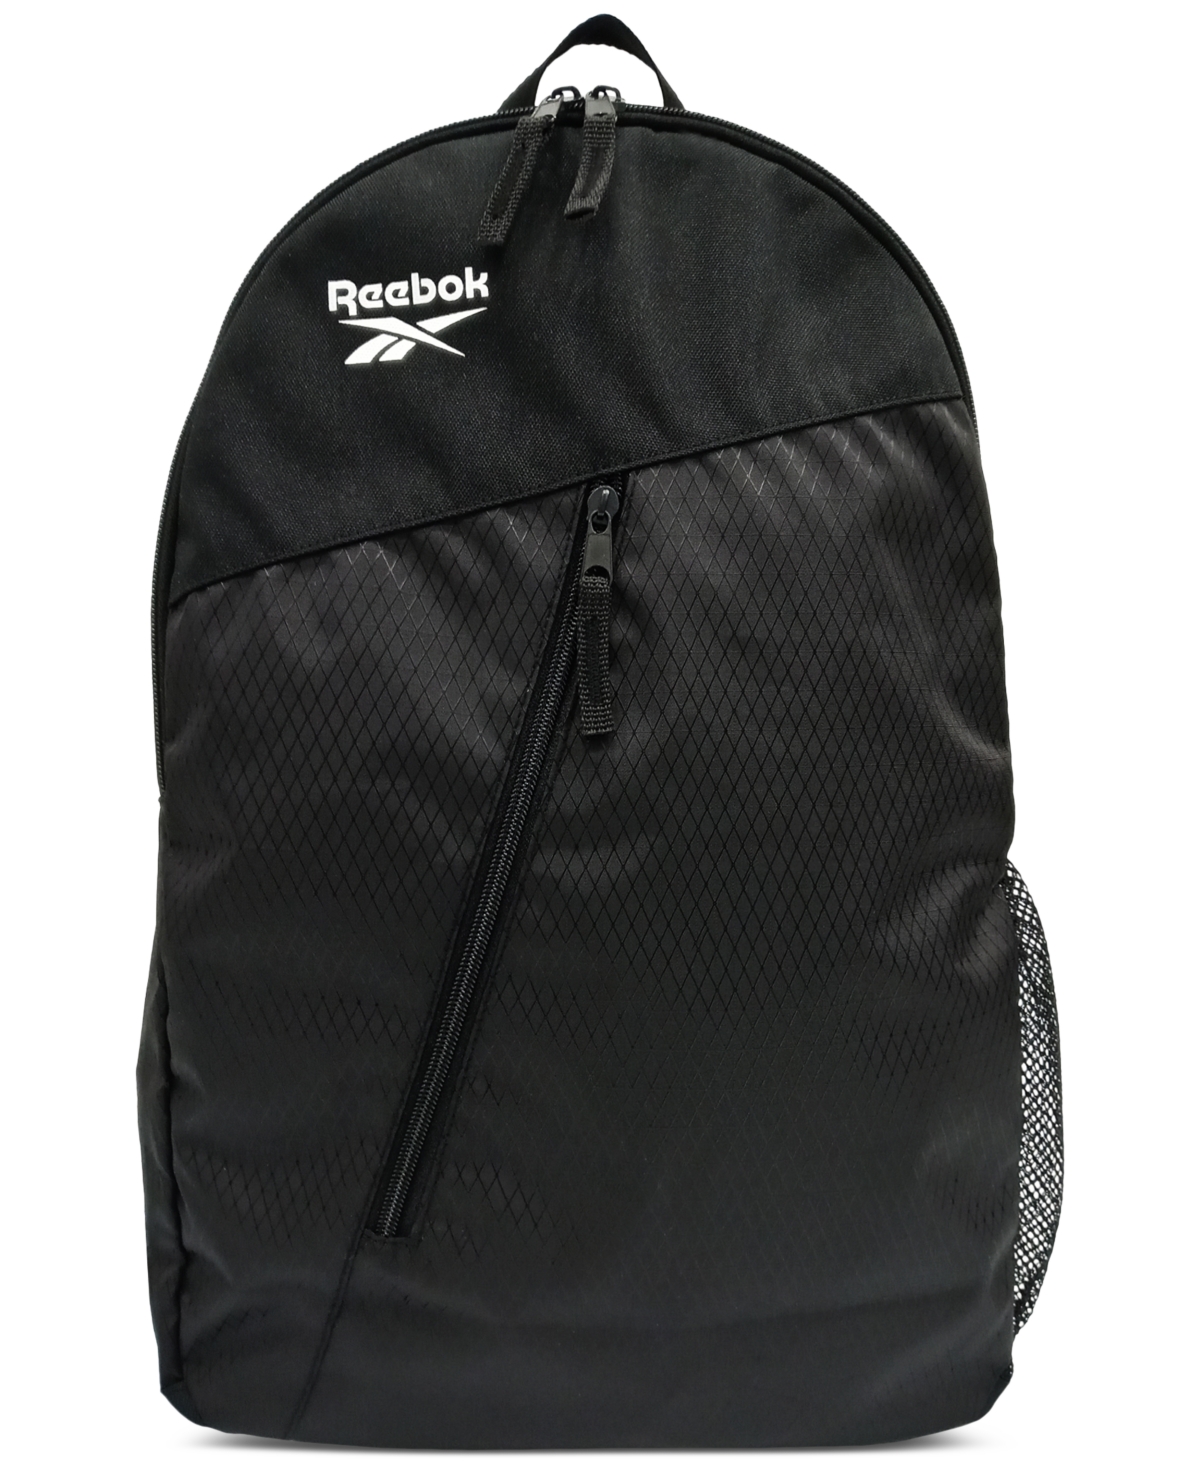 Reebok Topaz Backpack In Black